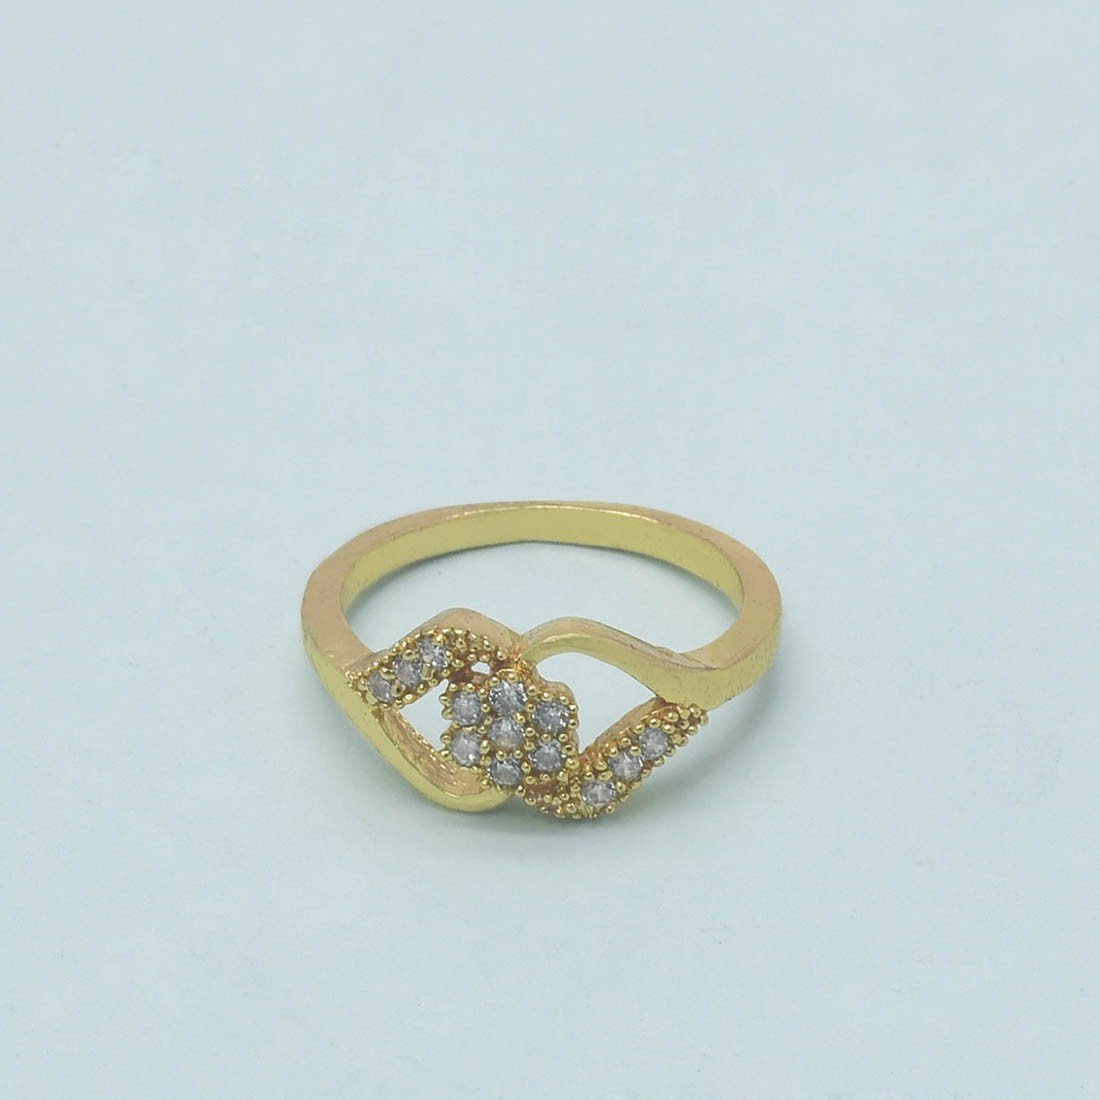 Buy Beautiful flower Modern gold Ring Design impon Stone Ring imitation  jewelry